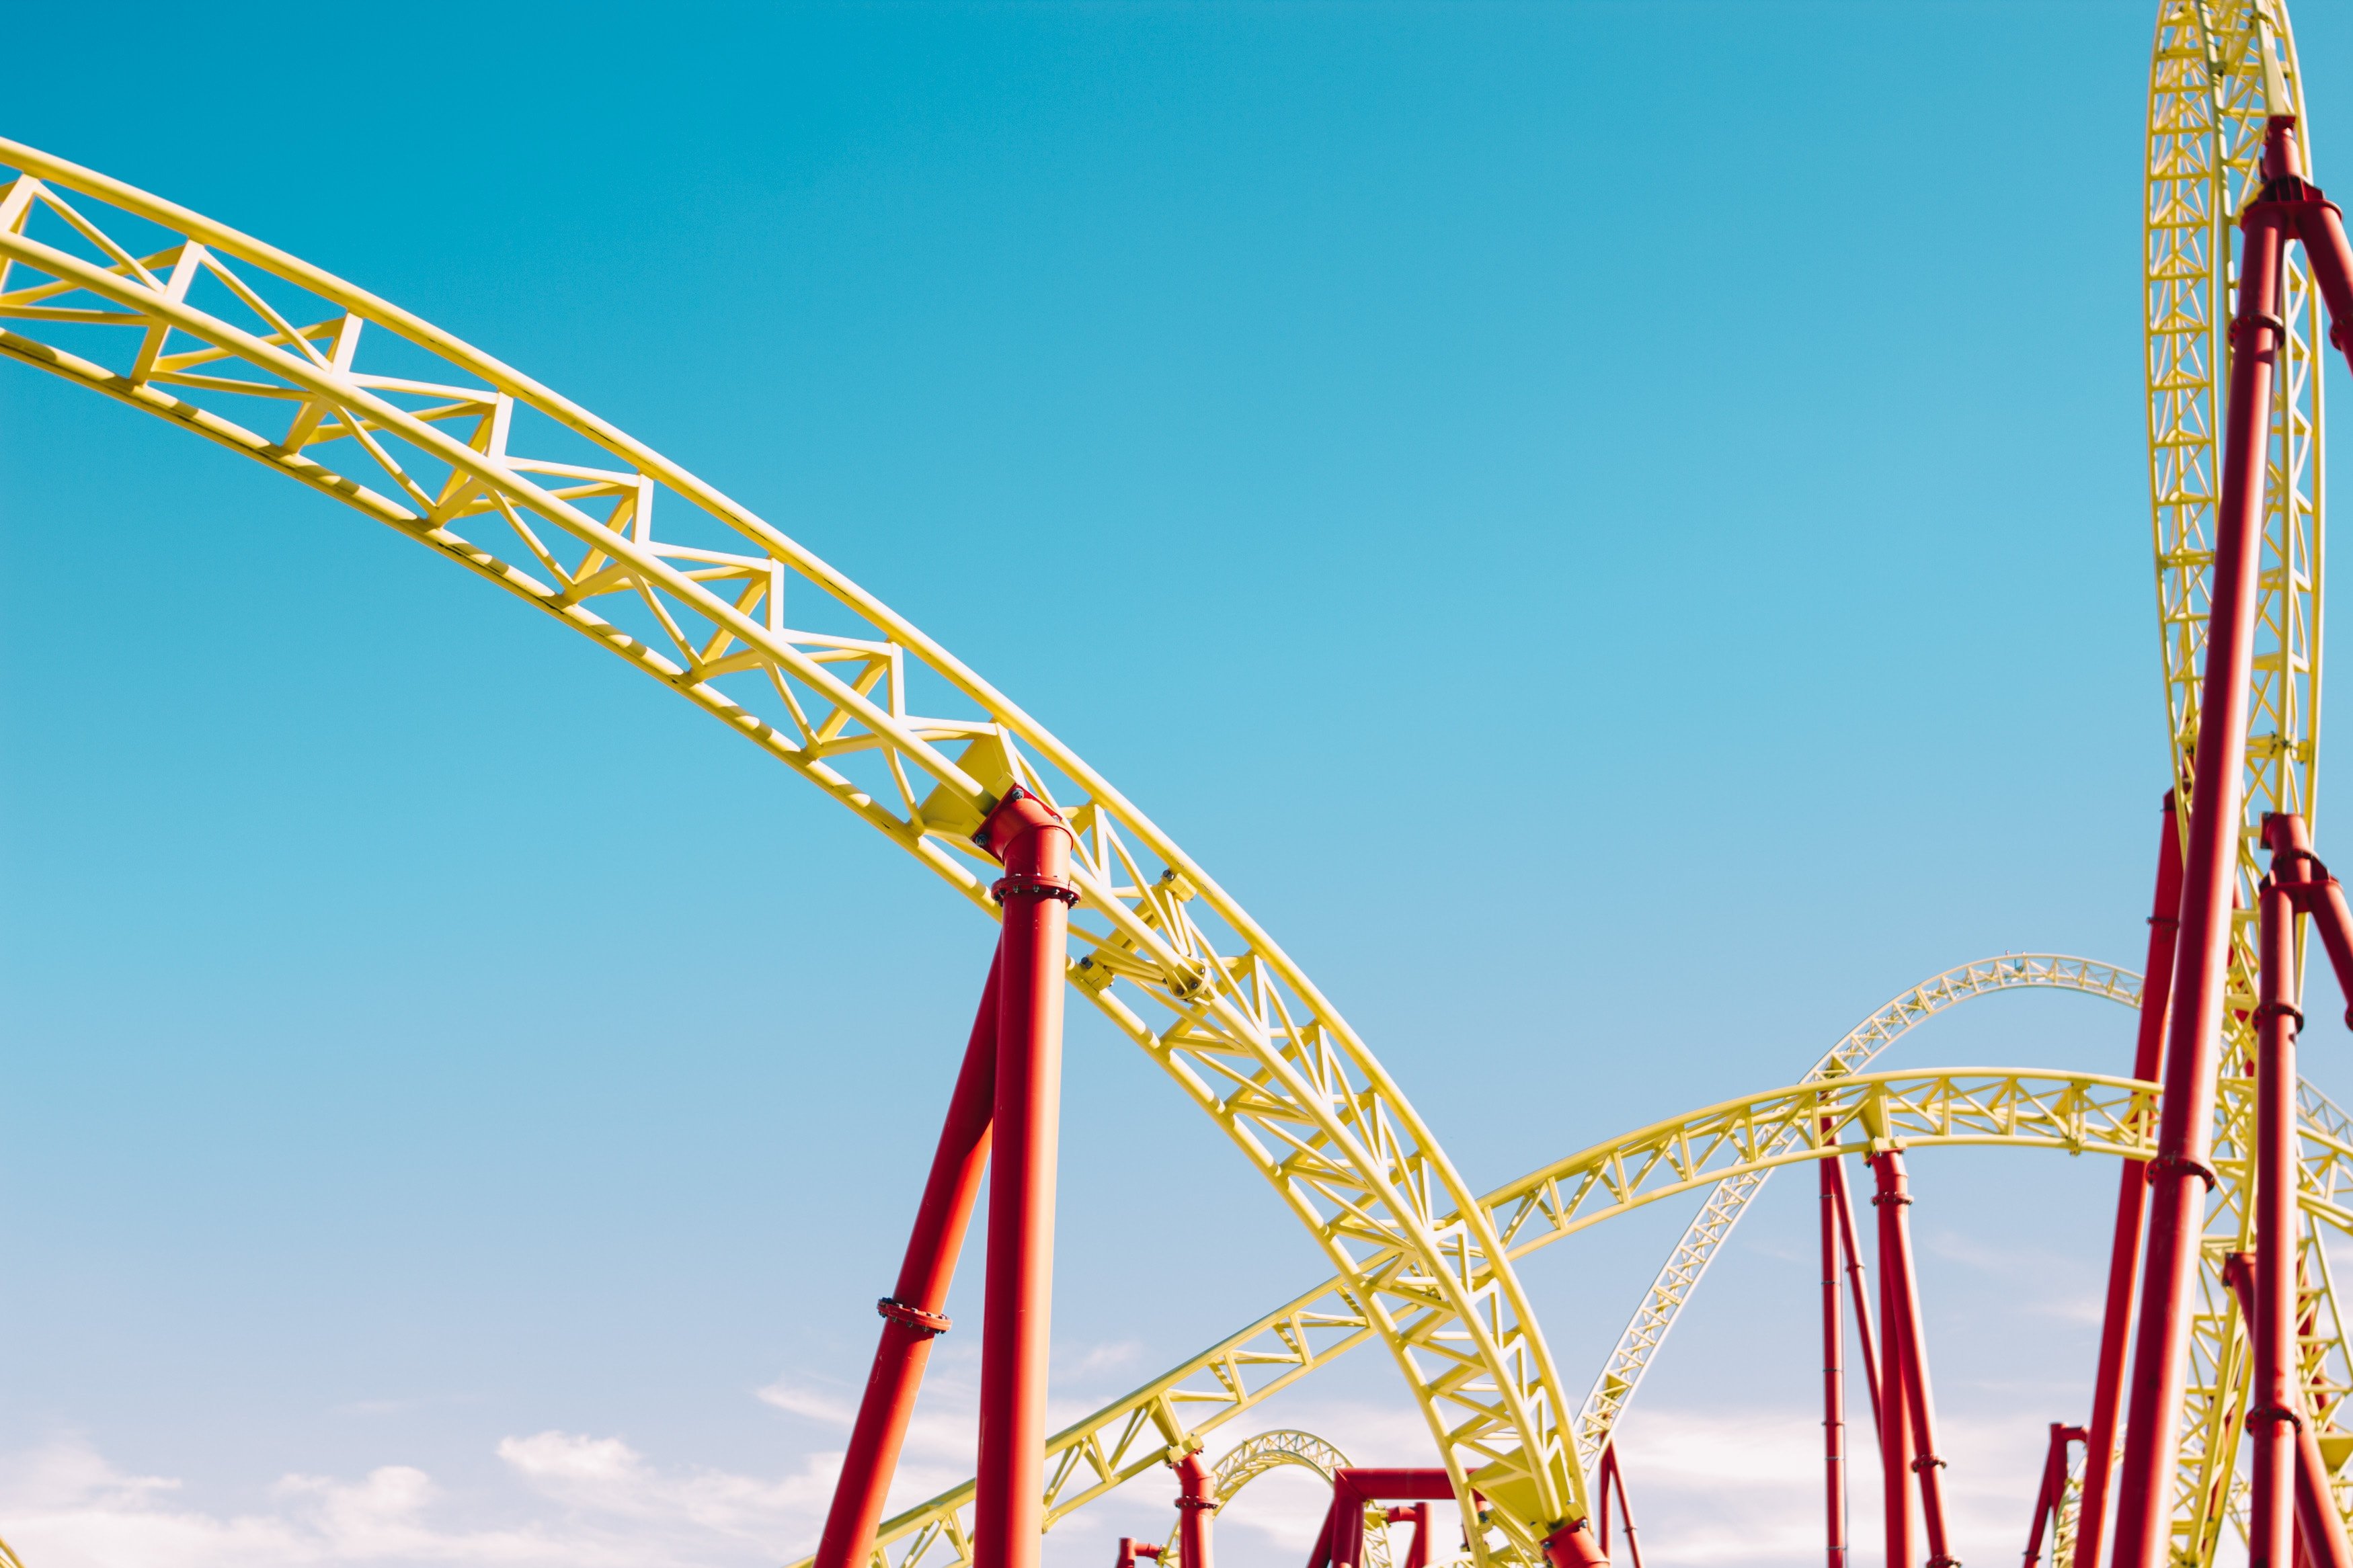 A rollercoaster at an amusement park. | Source: Unsplash